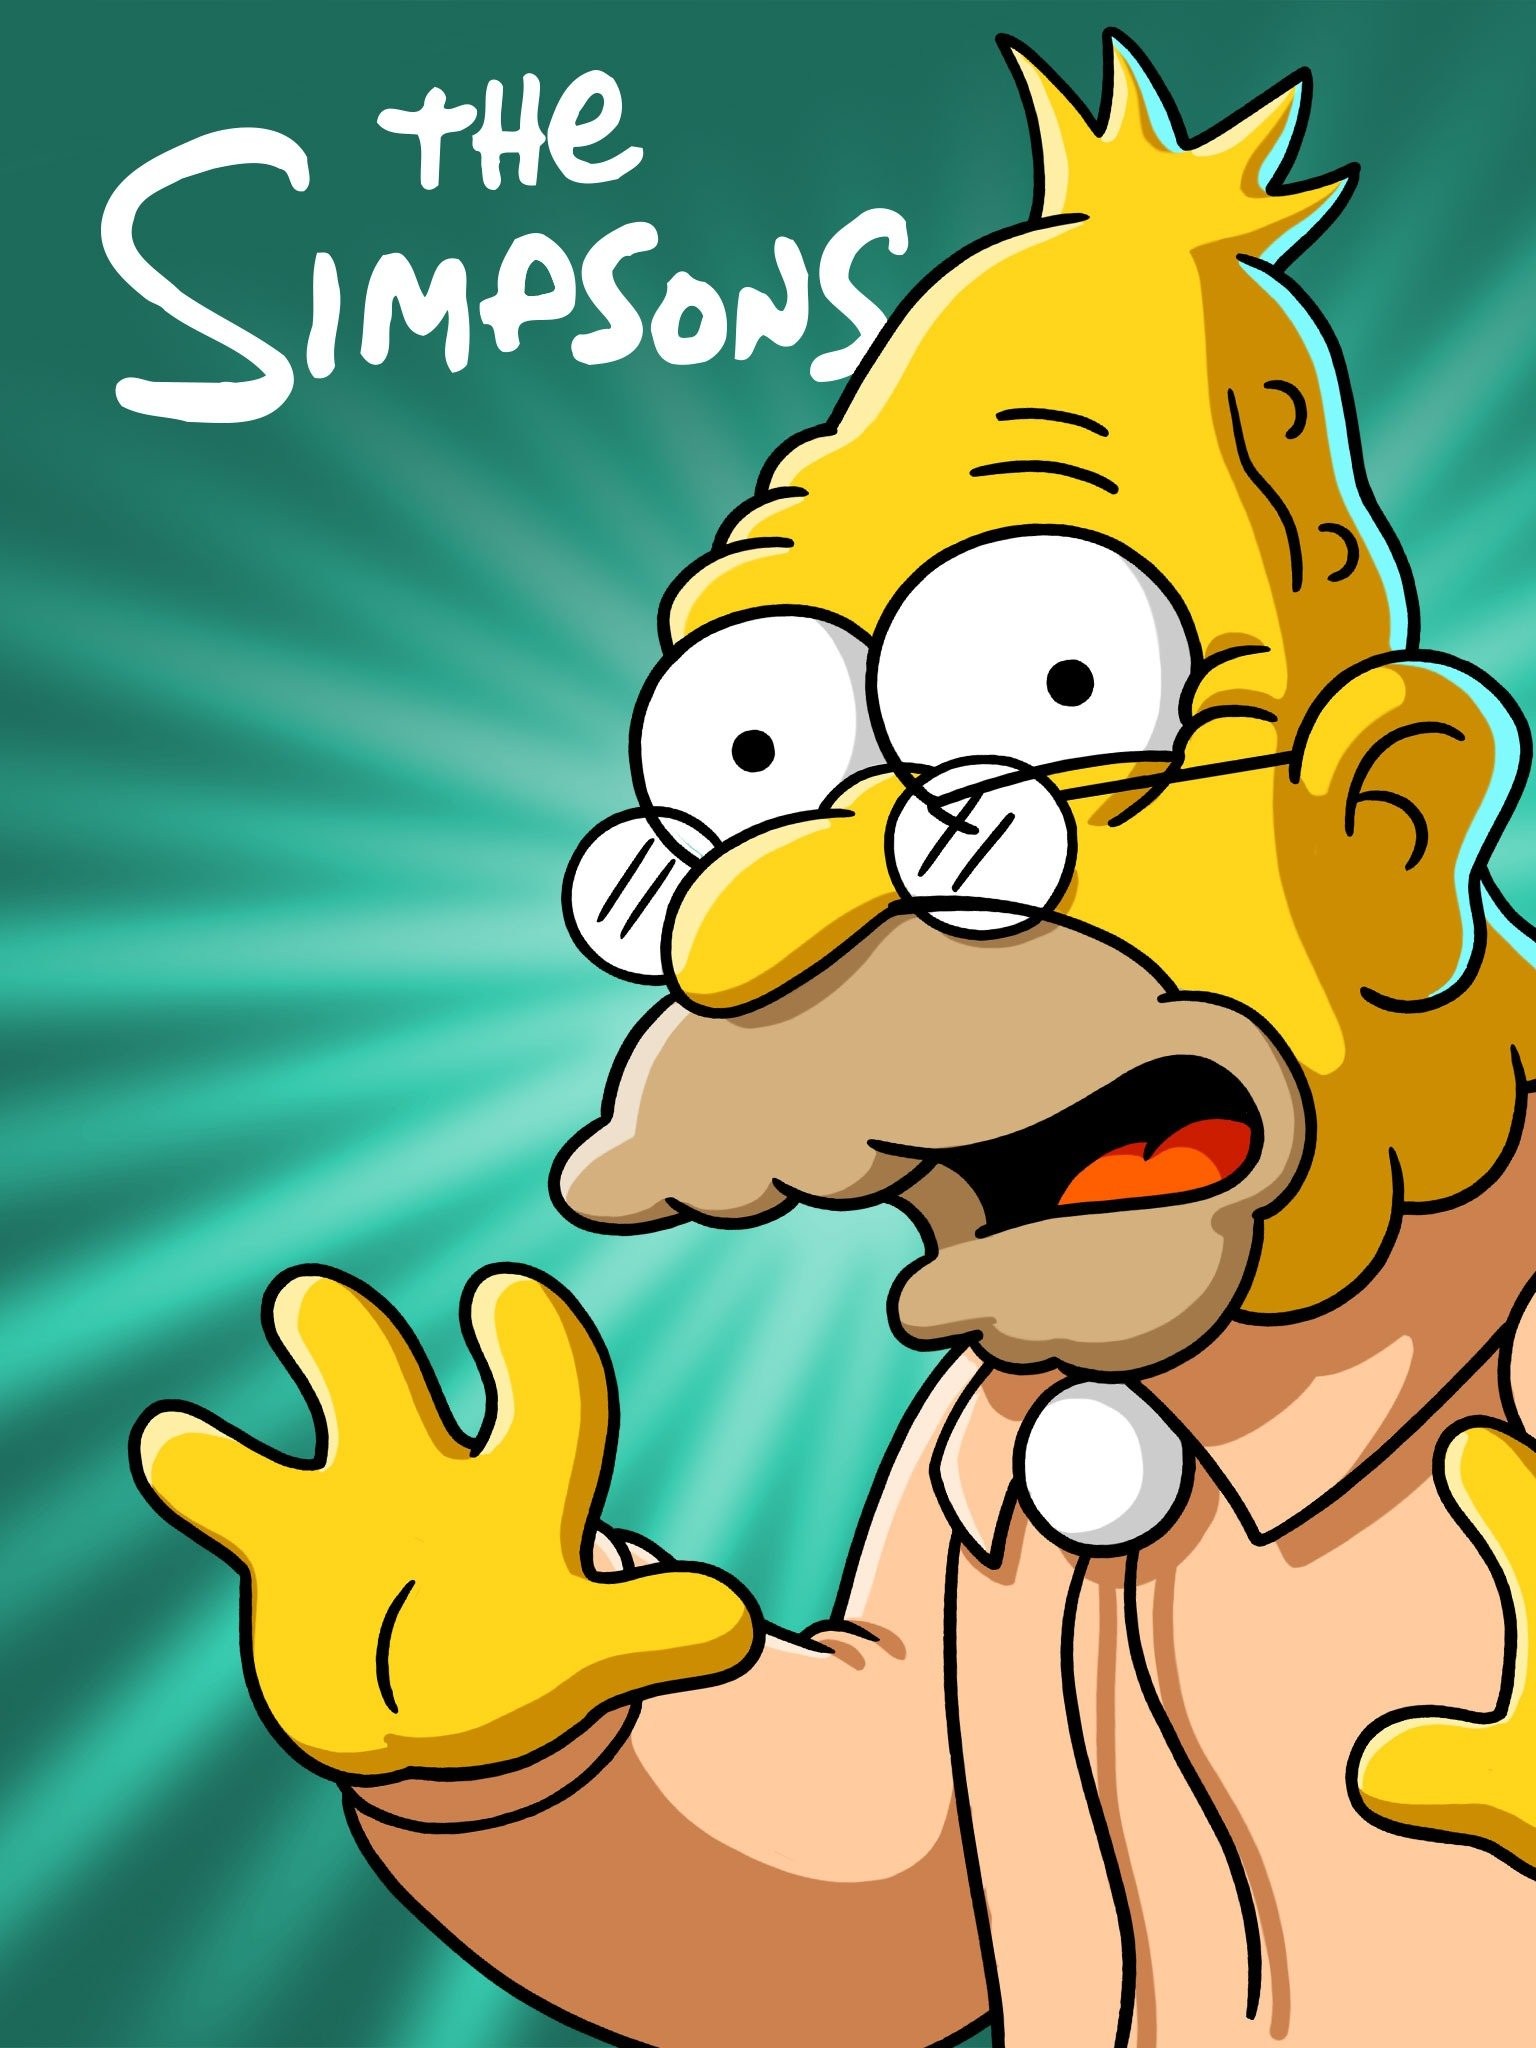 The Simpsons (season 34) - Wikipedia